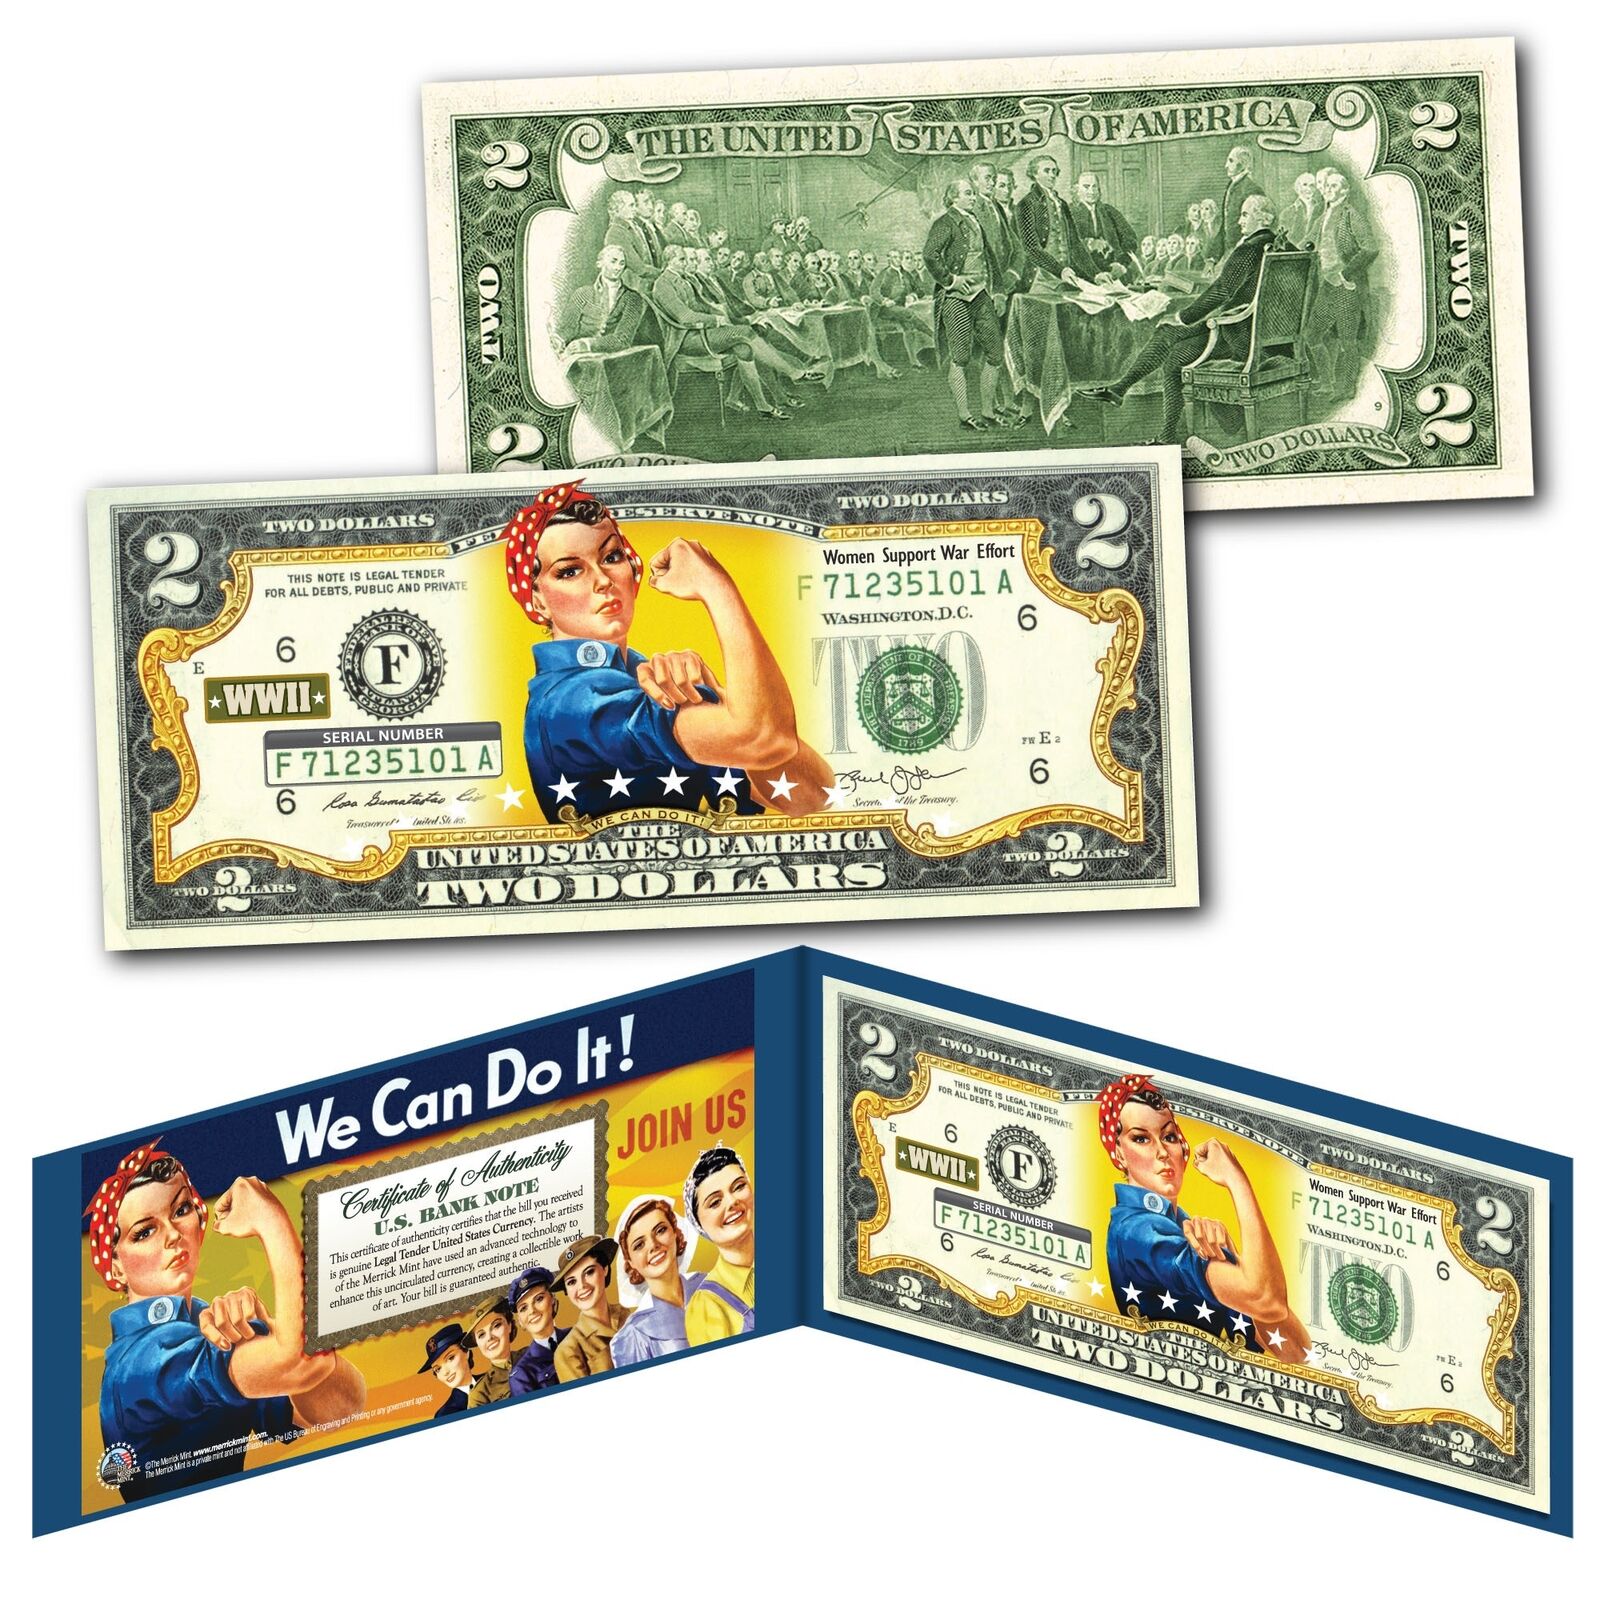 ROSIE THE RIVETER WWII Cultural Icon Women's Economic Power Genuine U.S. $2 Bill